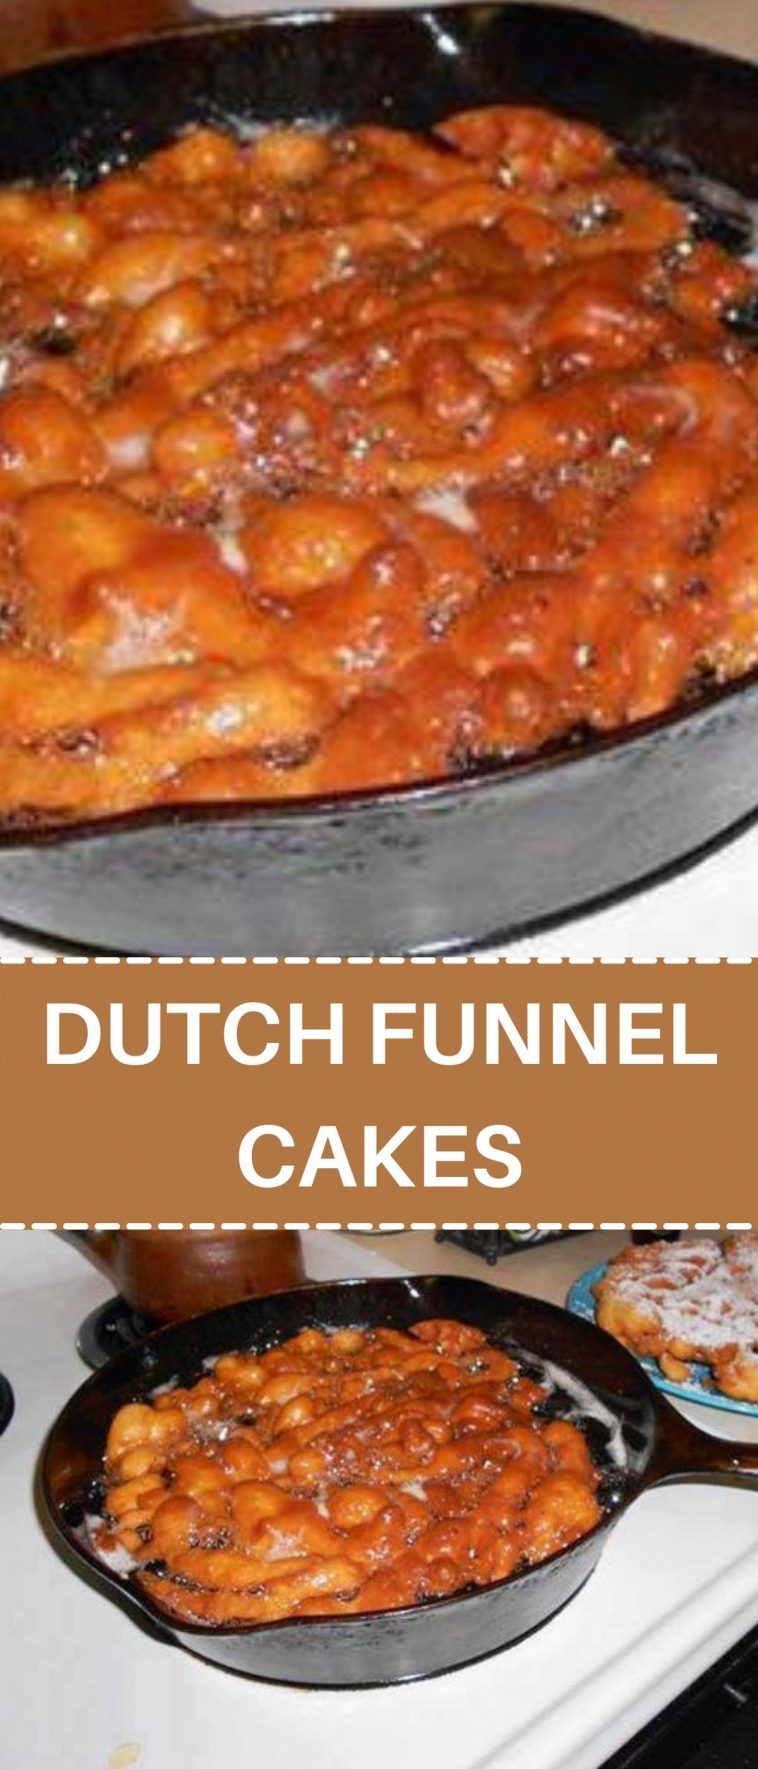 DUTCH FUNNEL CAKES